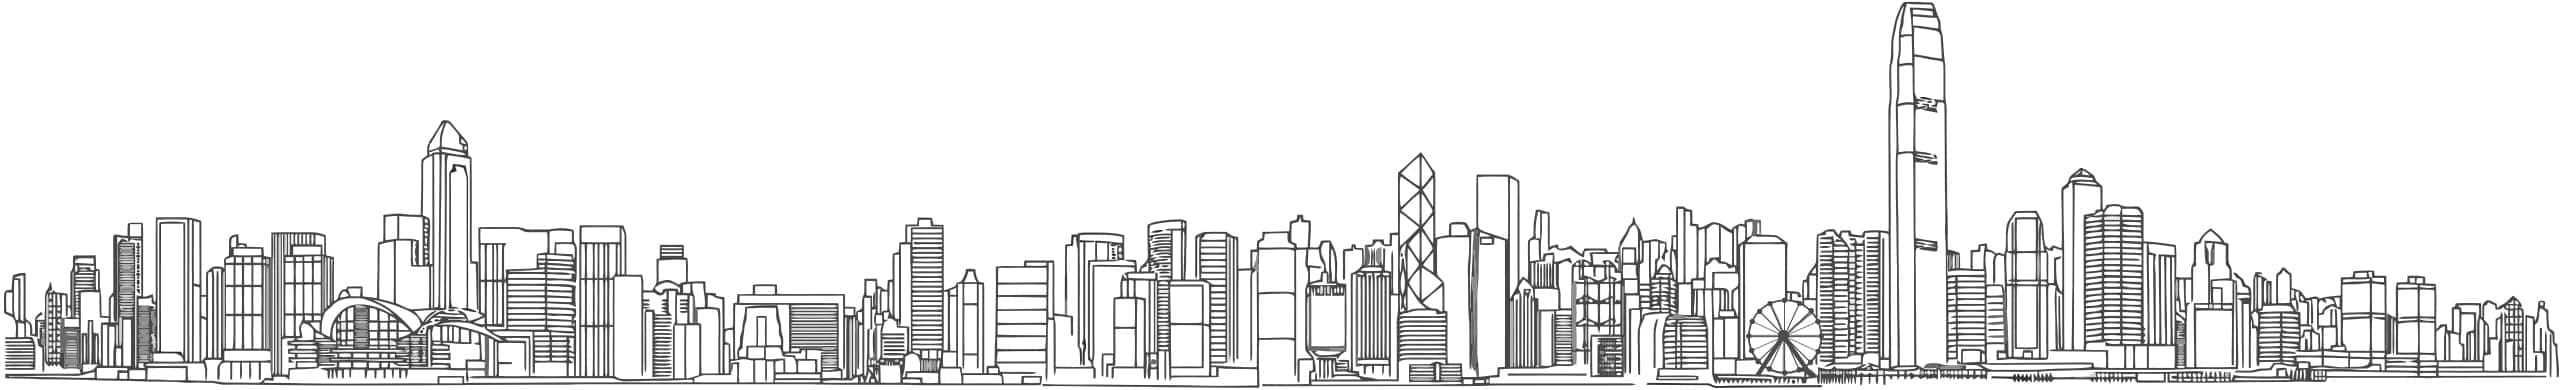 Know Us - Addison Wan Hong Kong Web Design